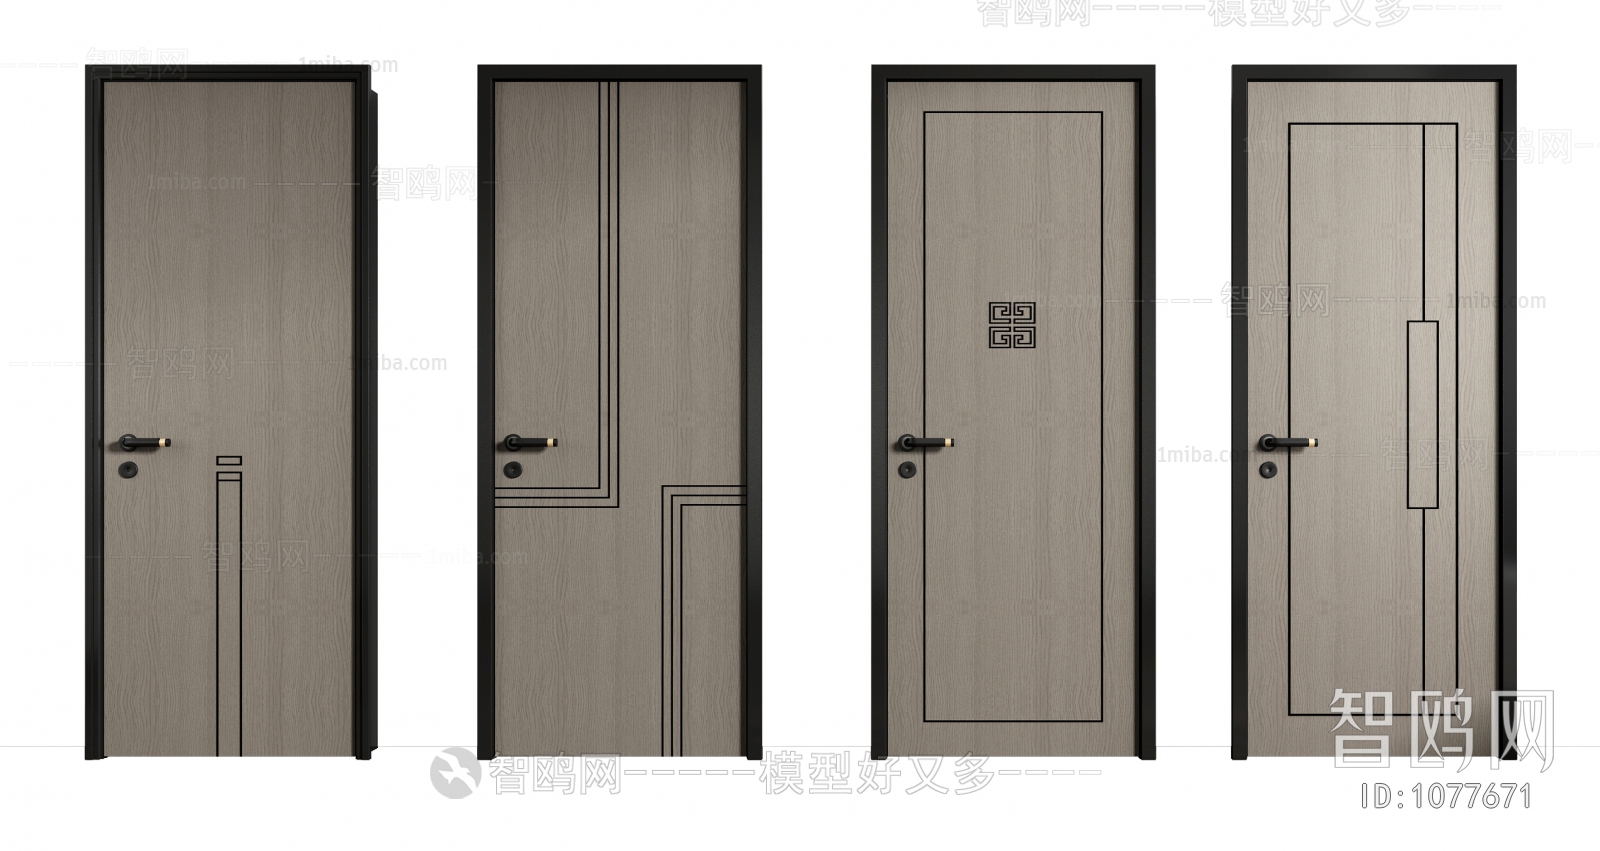 New Chinese Style Single Door